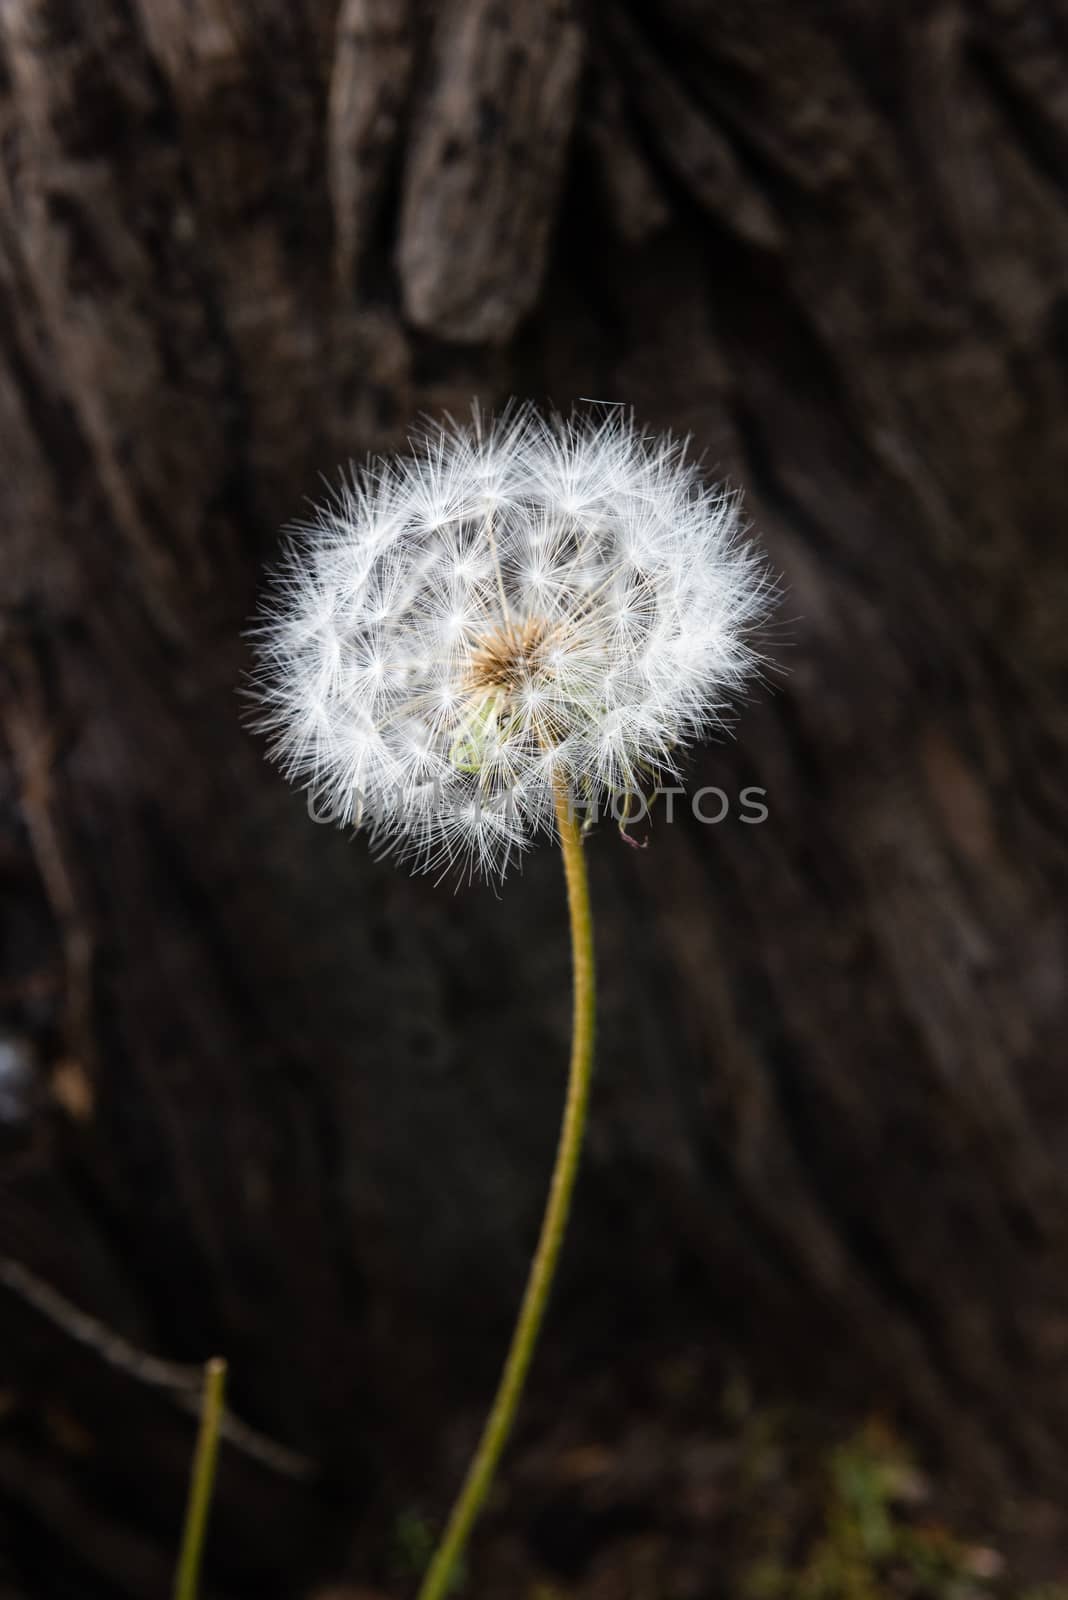 dandelion seed head (Taraxacum) by Njean